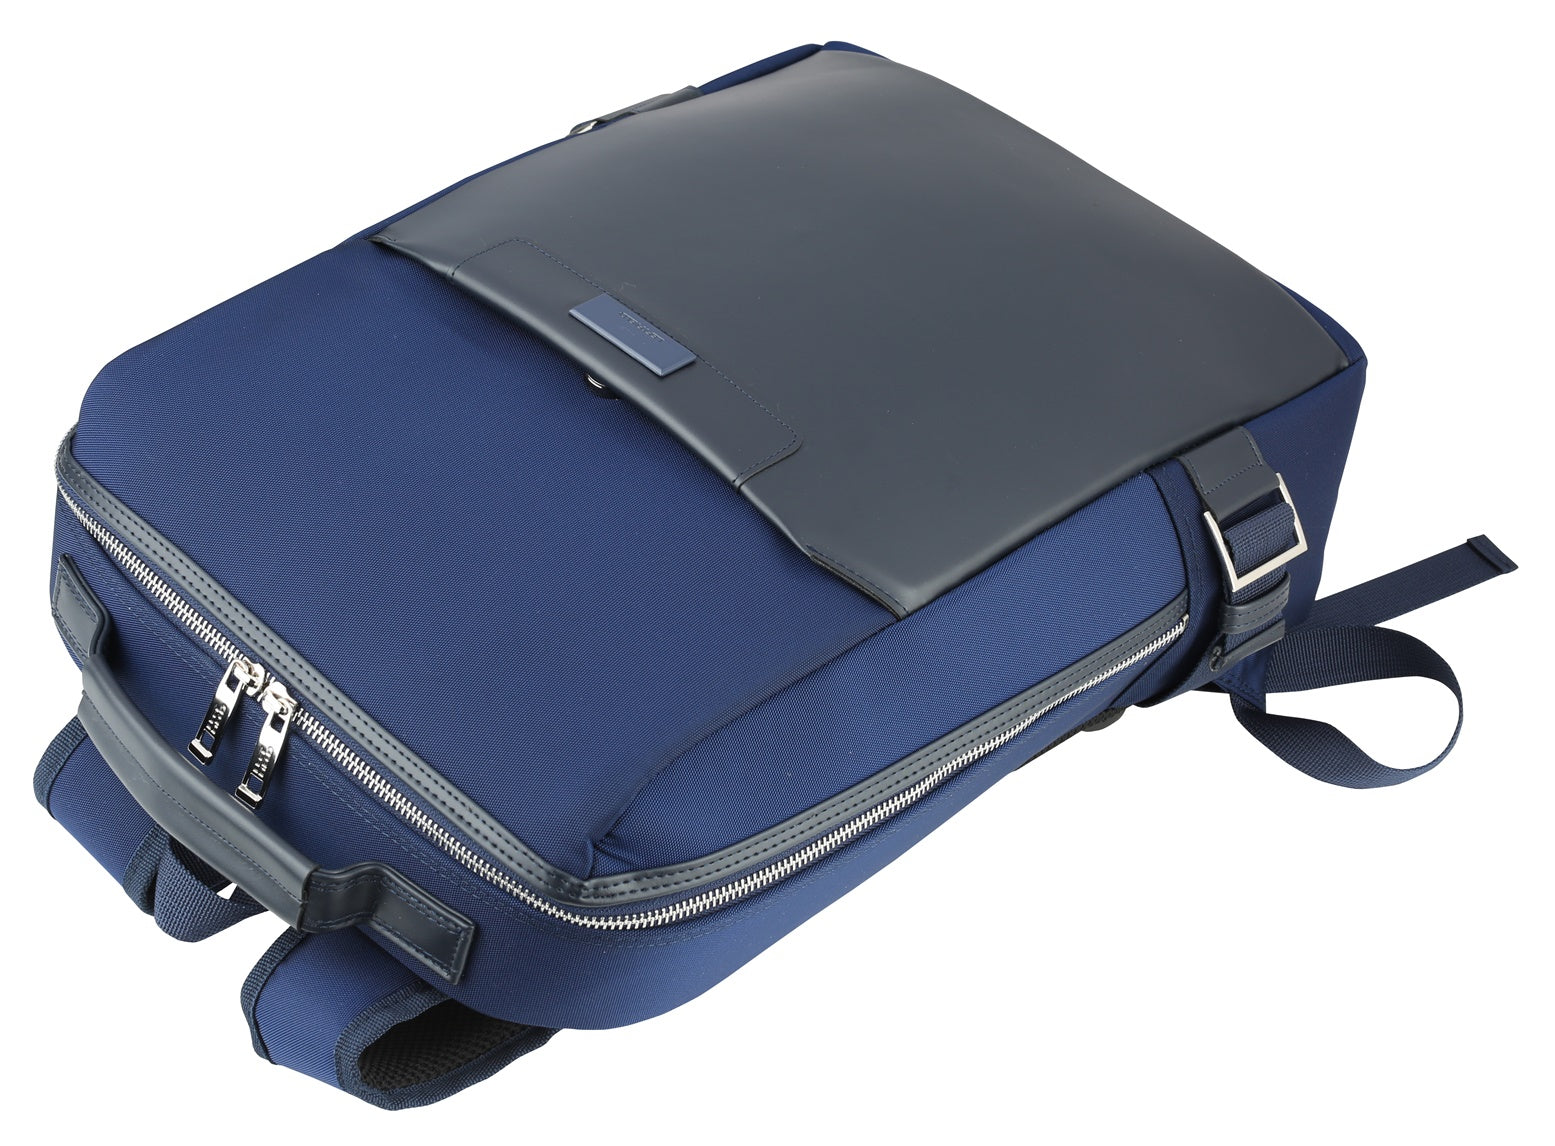 Navy Blue Hybrid Square Business Backpacks